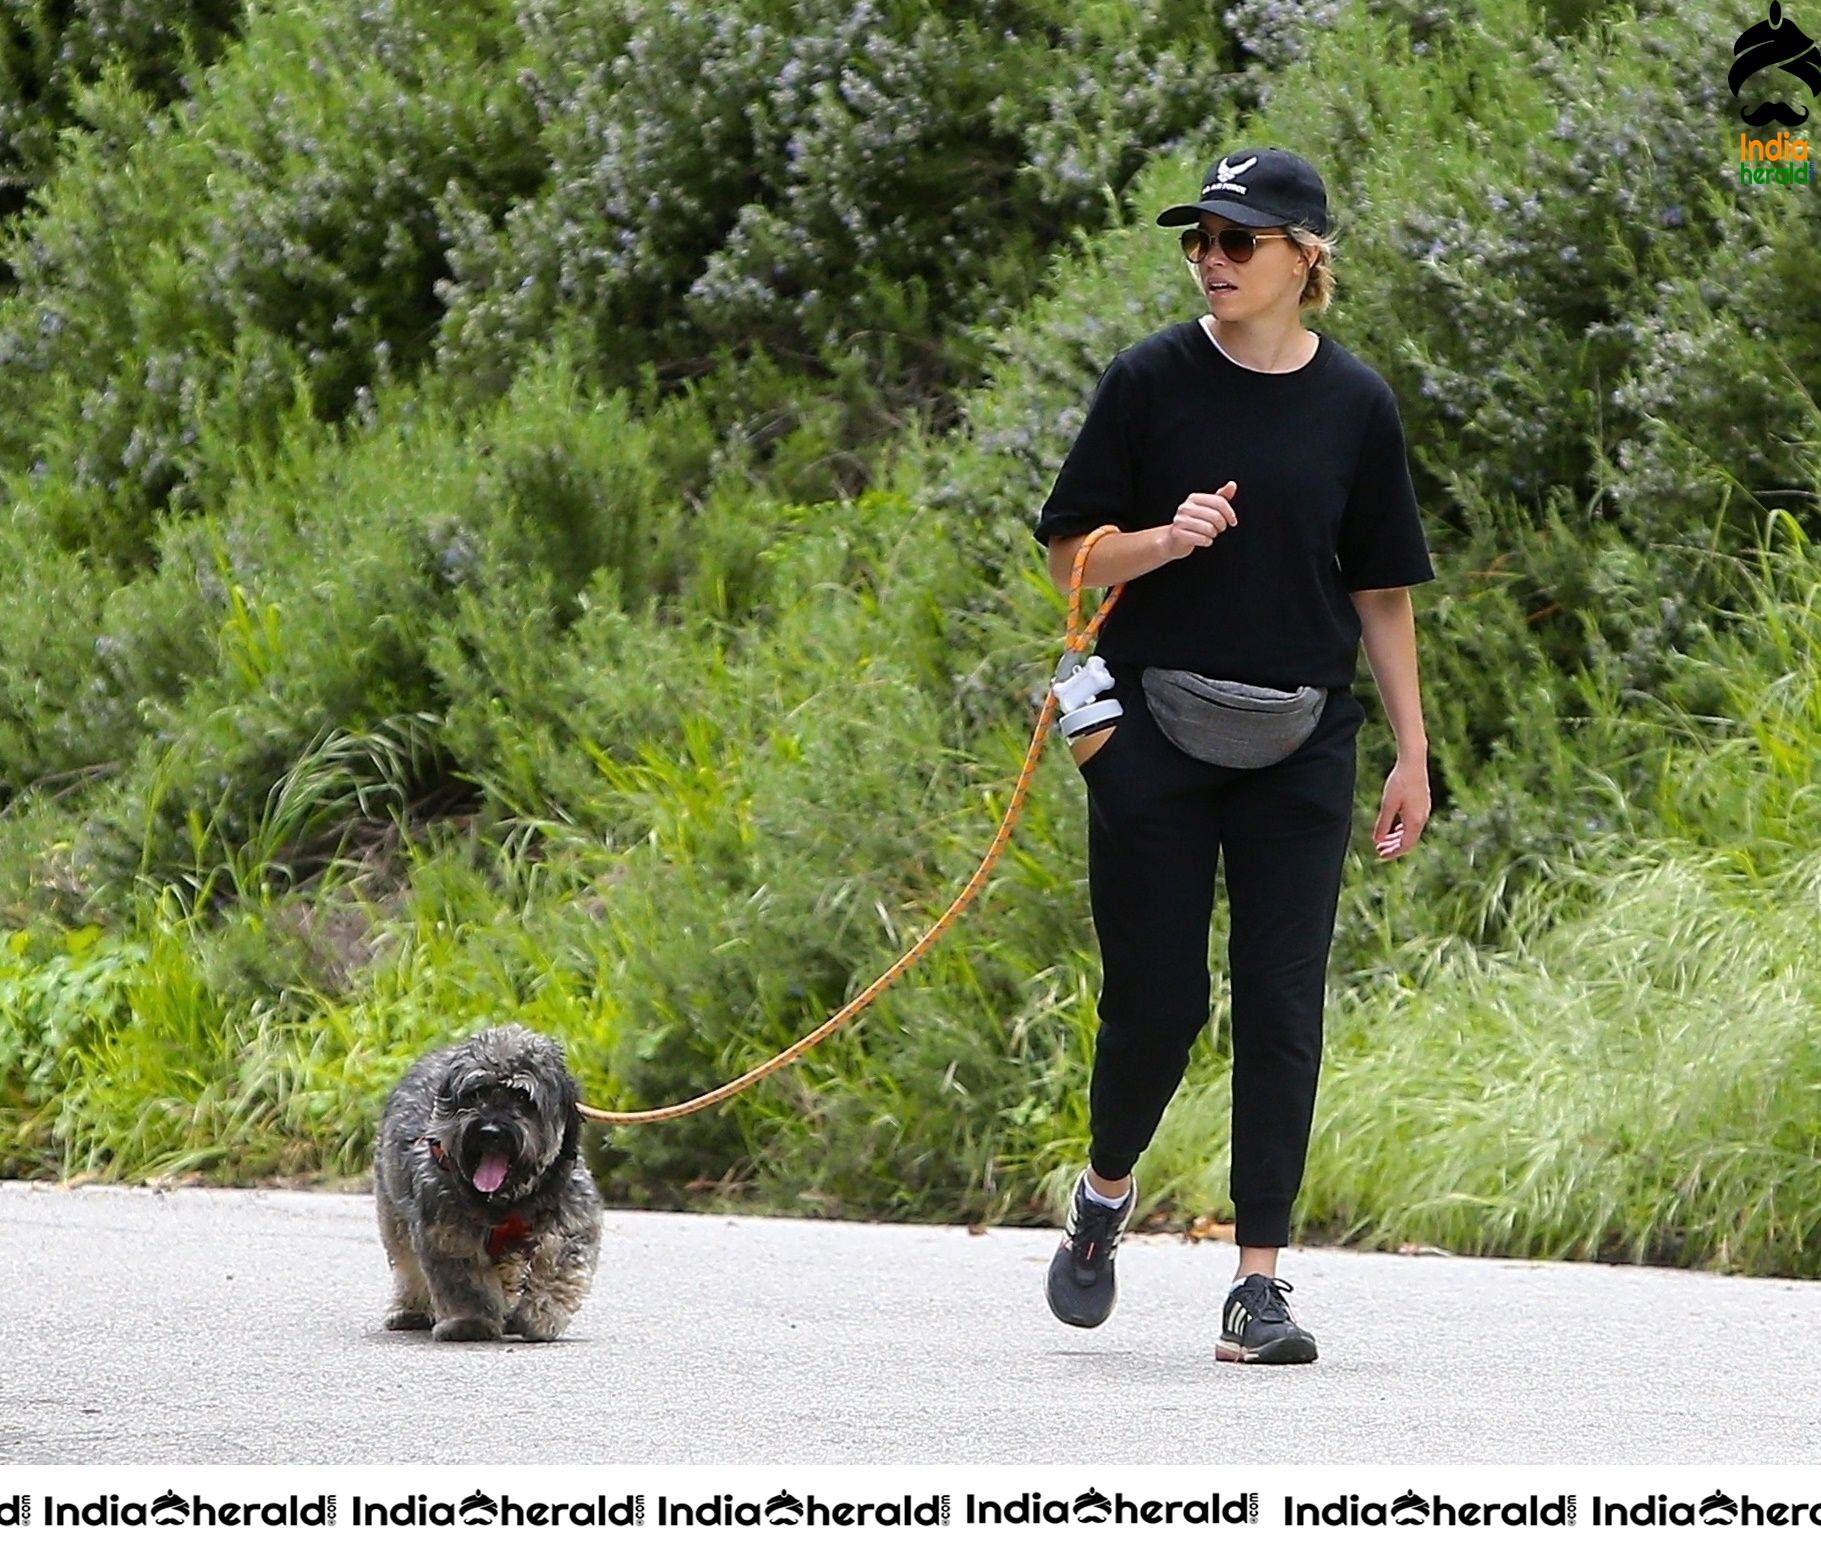 Elizabeth Banks Walks her dog in the Hollywood Hills despite Lockdown due to Corona Virus